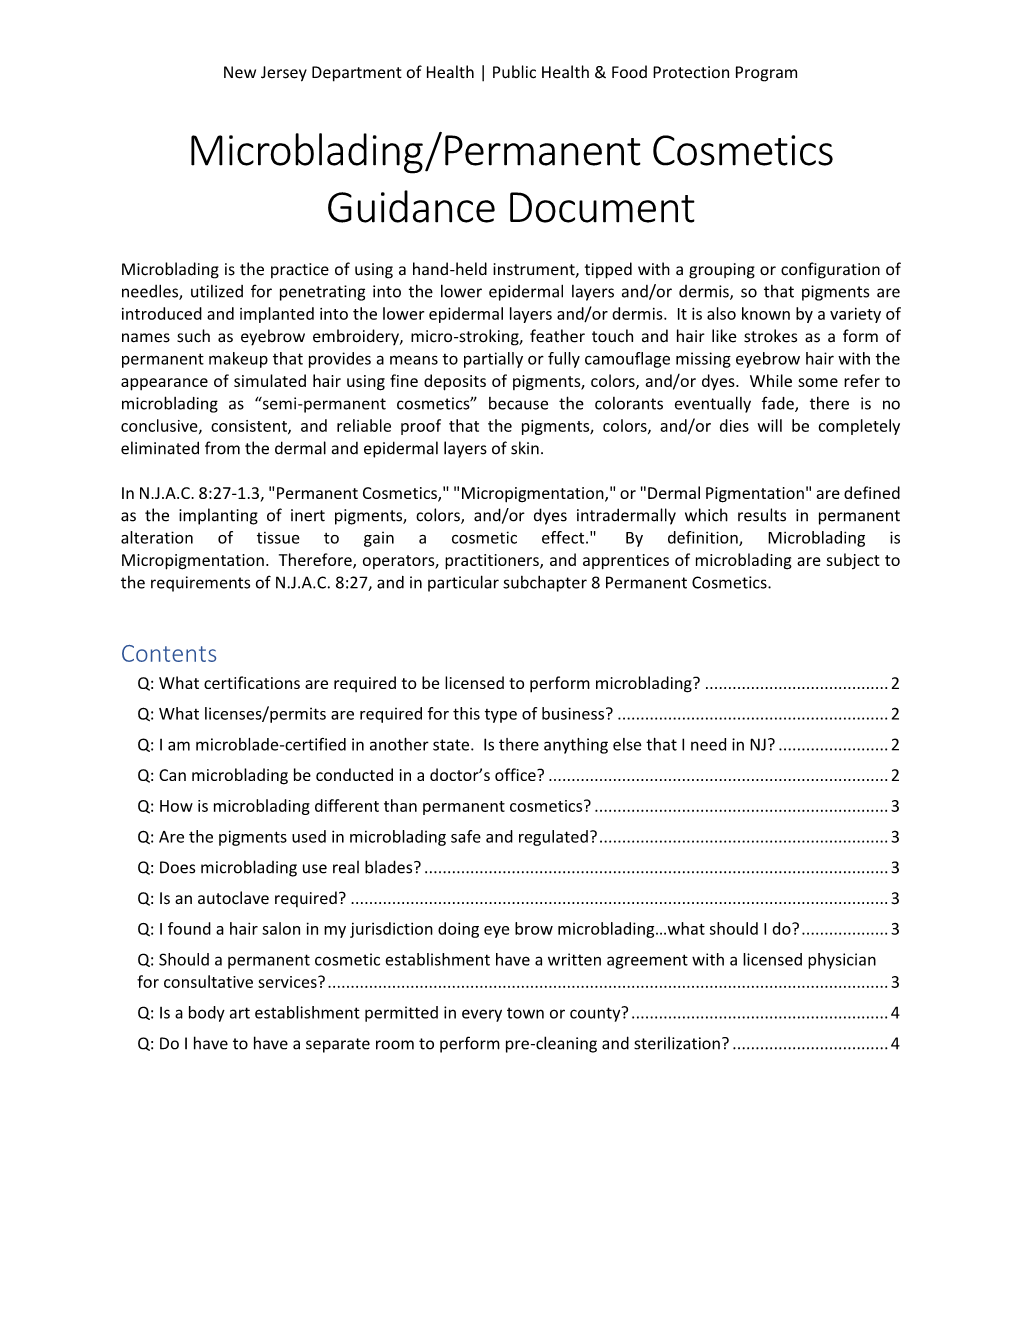 Microblading/Permanent Cosmetics Guidance Document